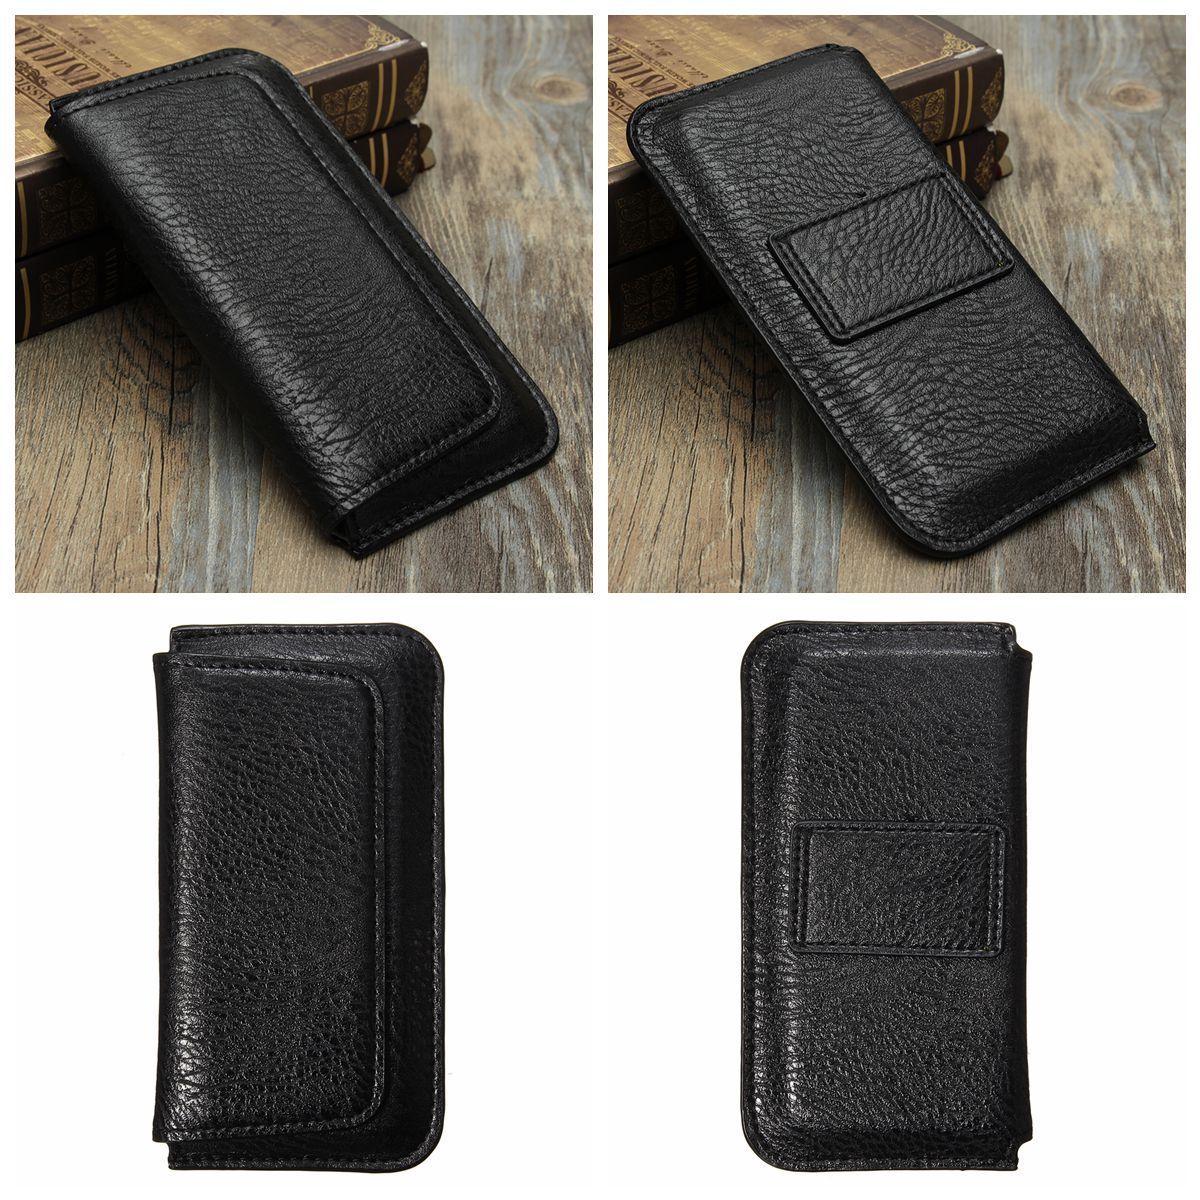 Belt Clip Holster Flip Leather Case Cover For Apple Iphone 6 6s, Black